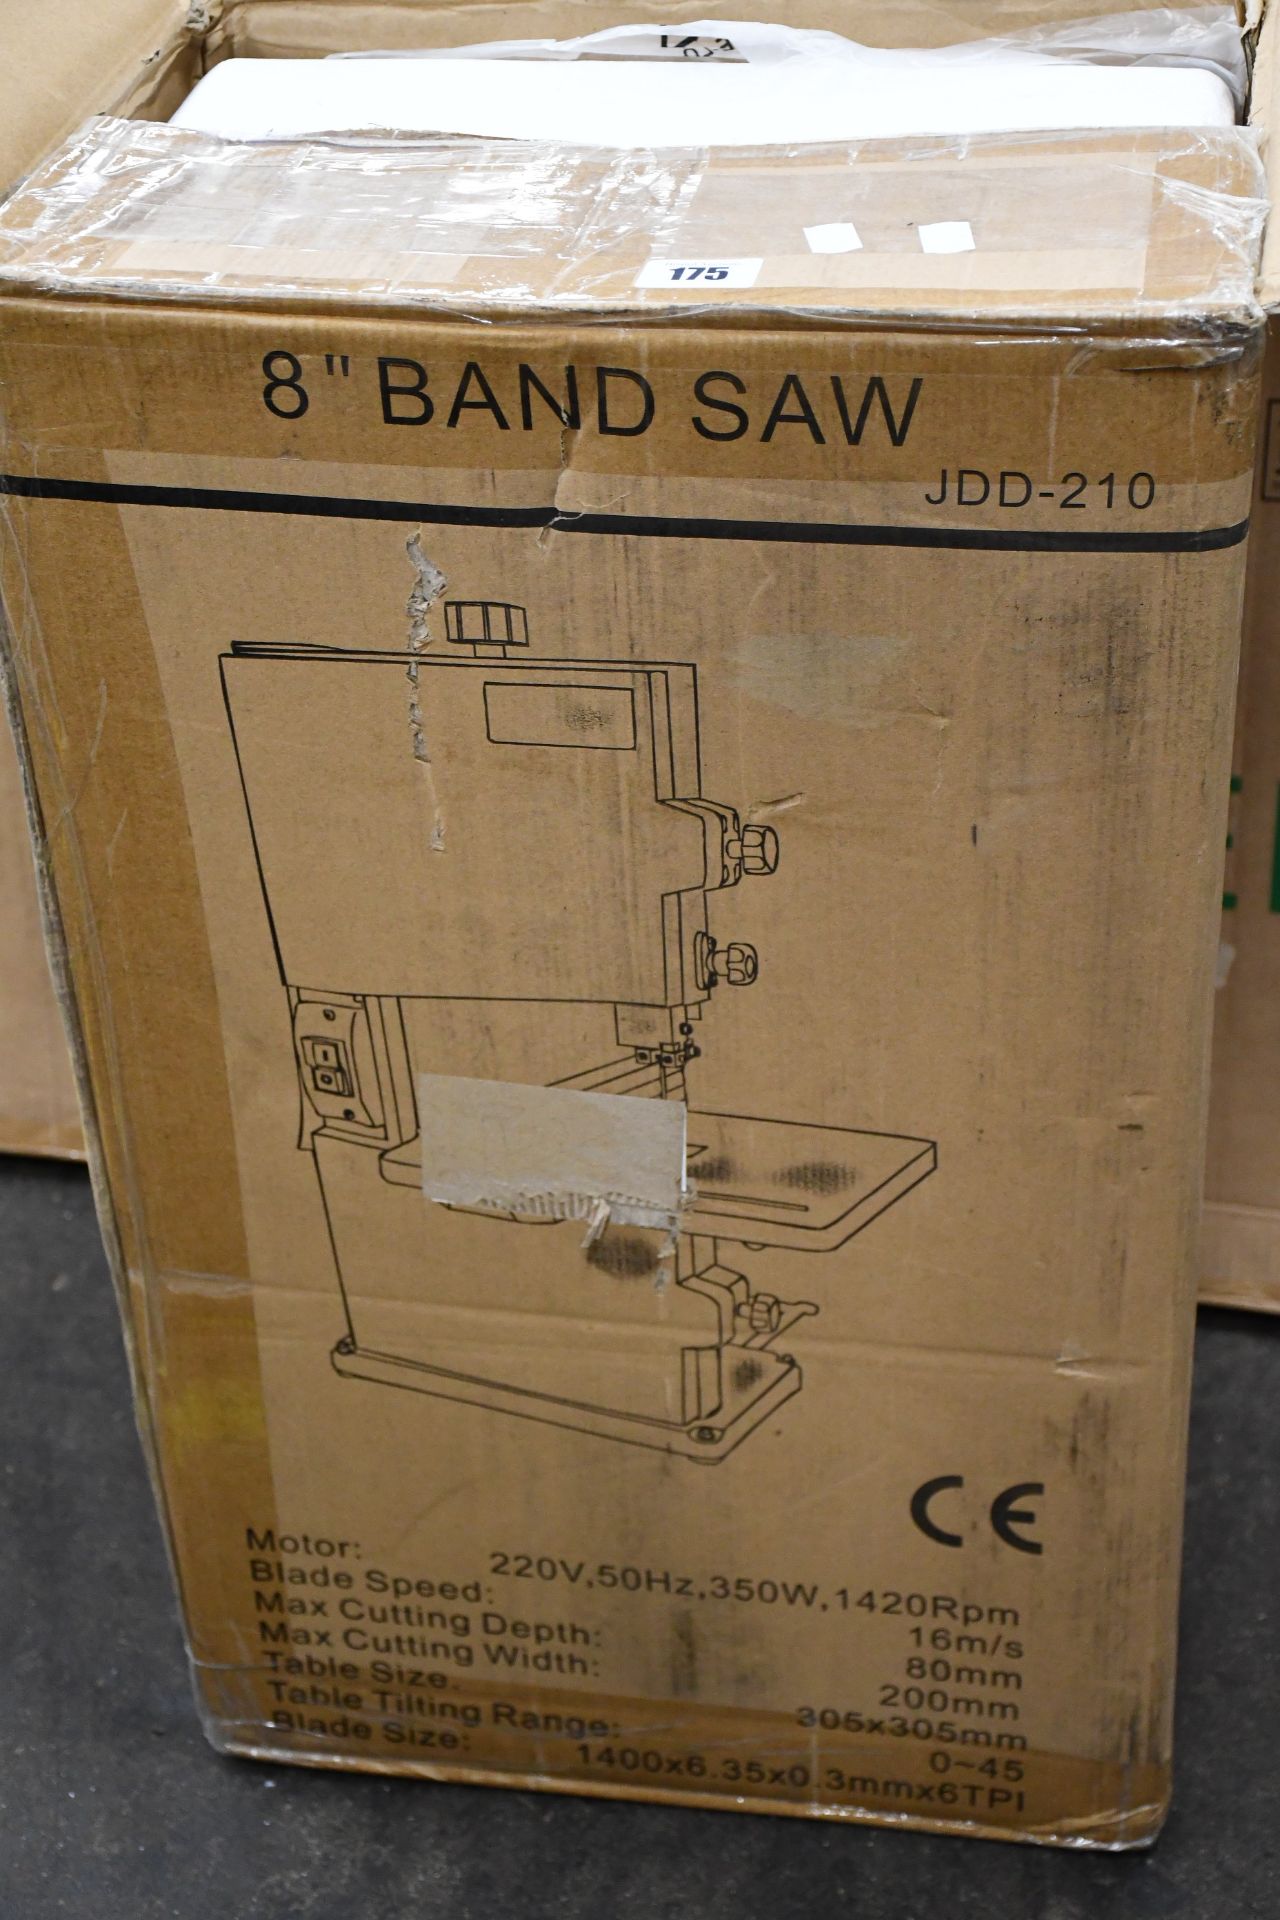 One boxed as new 8" bandsaw JDD-210 (80mm cutting depth, 200mm cutting width).